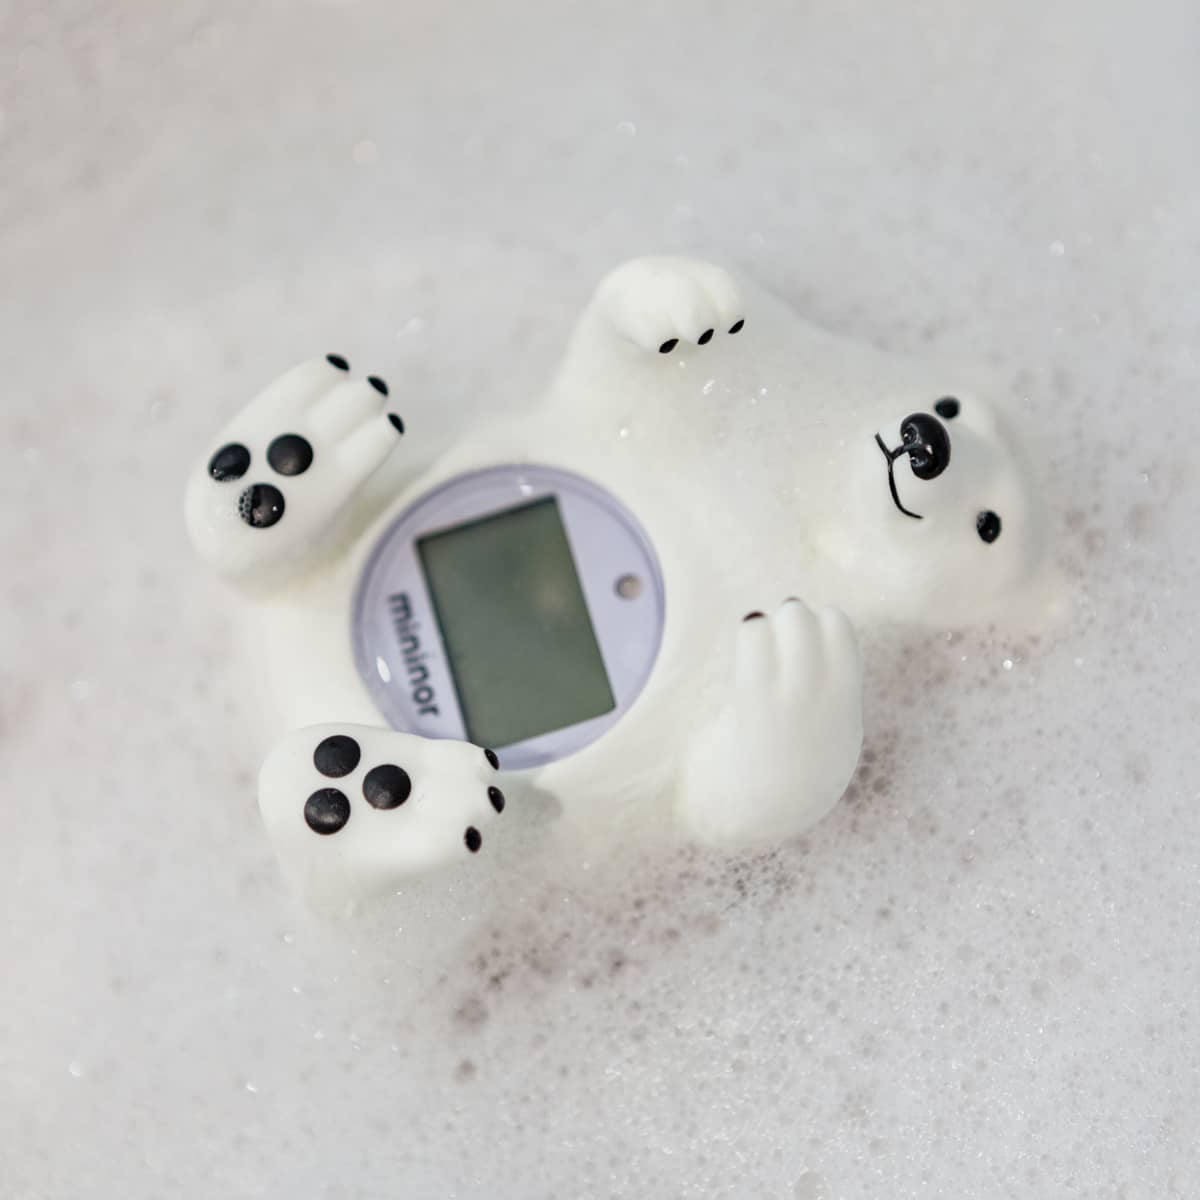 Mininor Room & Bath Thermometer - Polar Bear